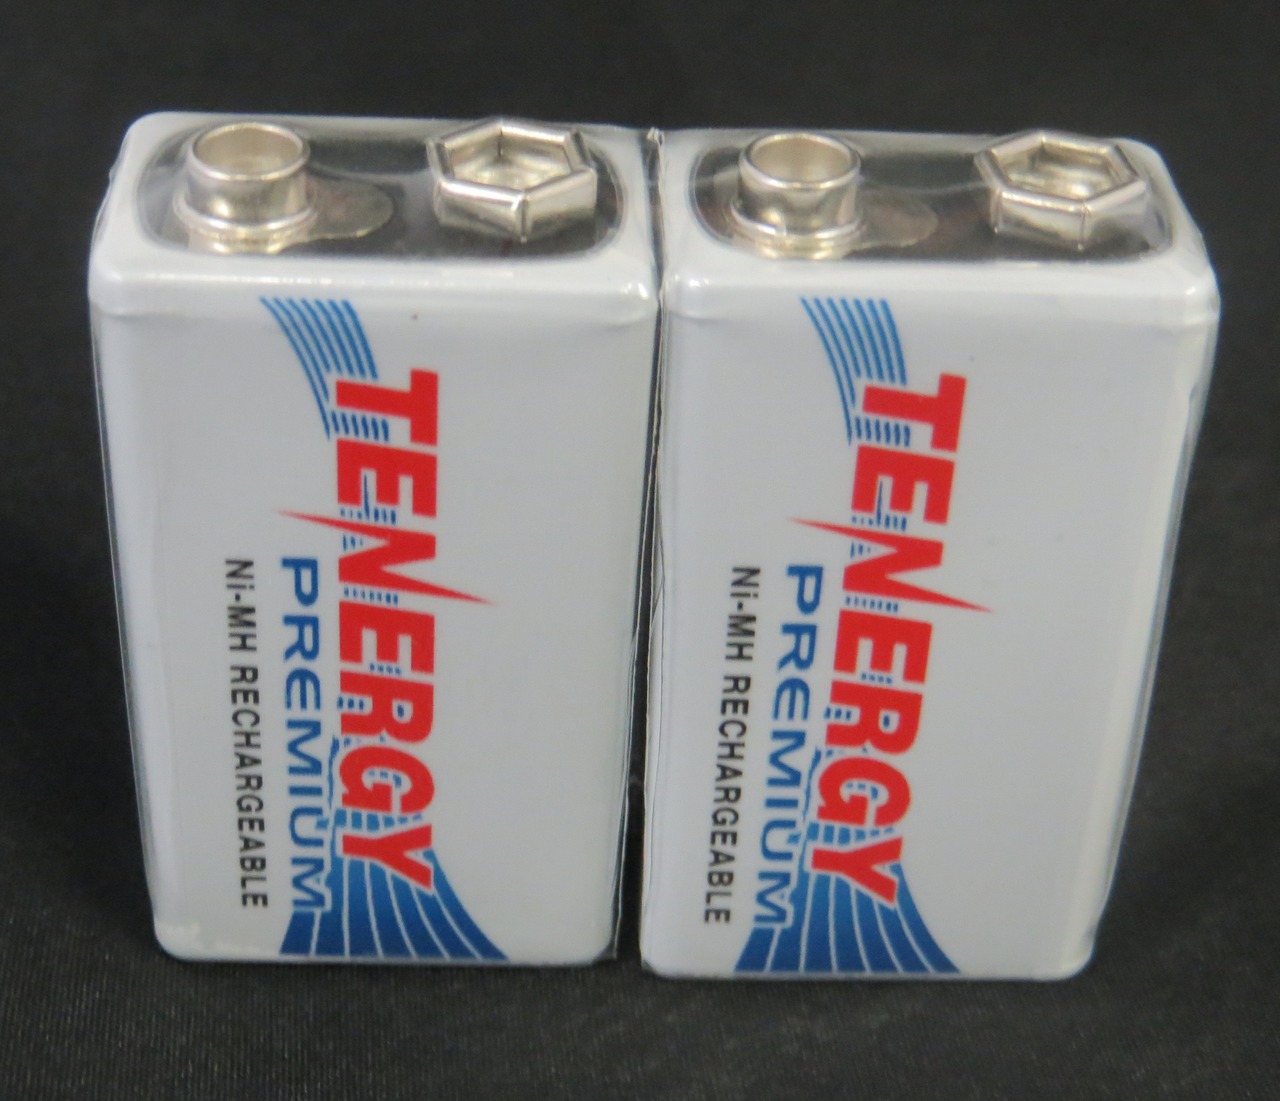 Tenergy Premium 9V NiMH 200mAh MAh Rechargeable Batteries - 2 Pack + FREE SHIPPING!